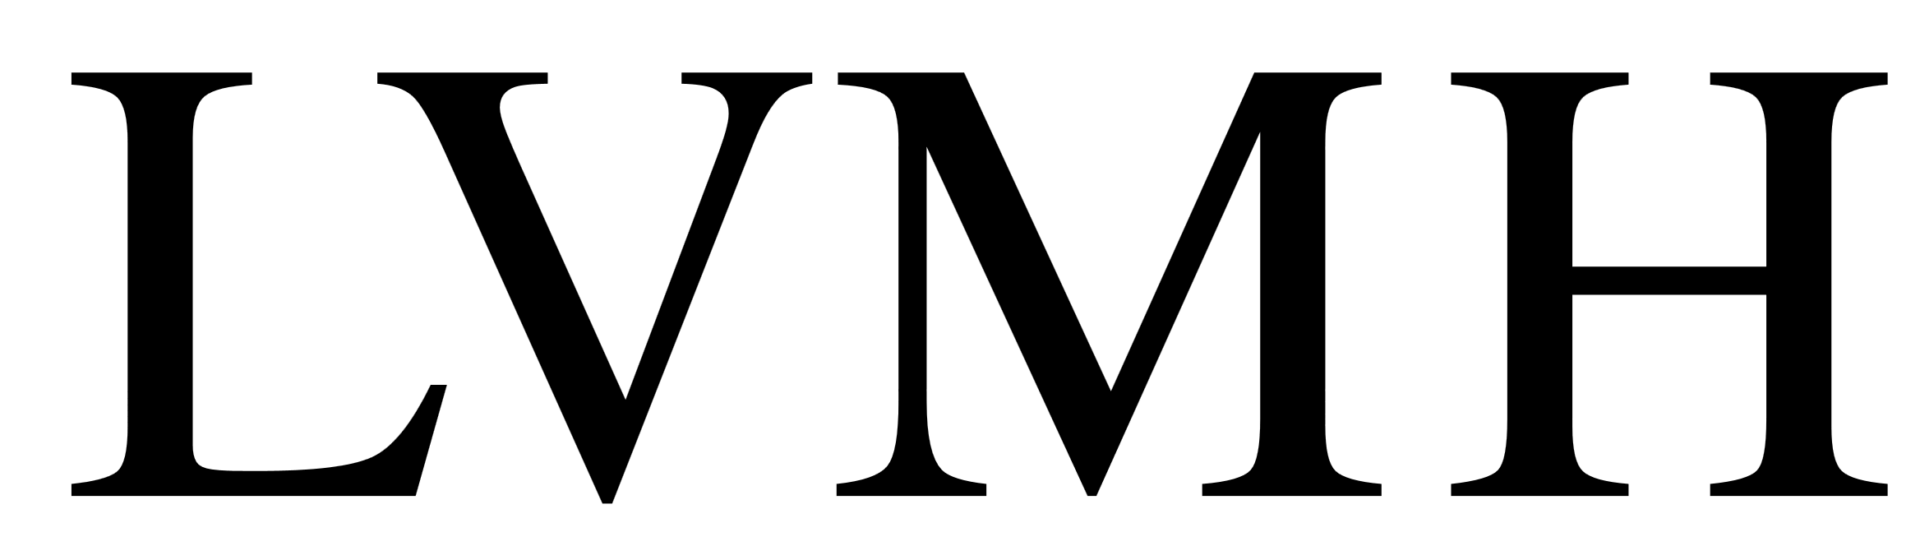 Logo LVMH noir